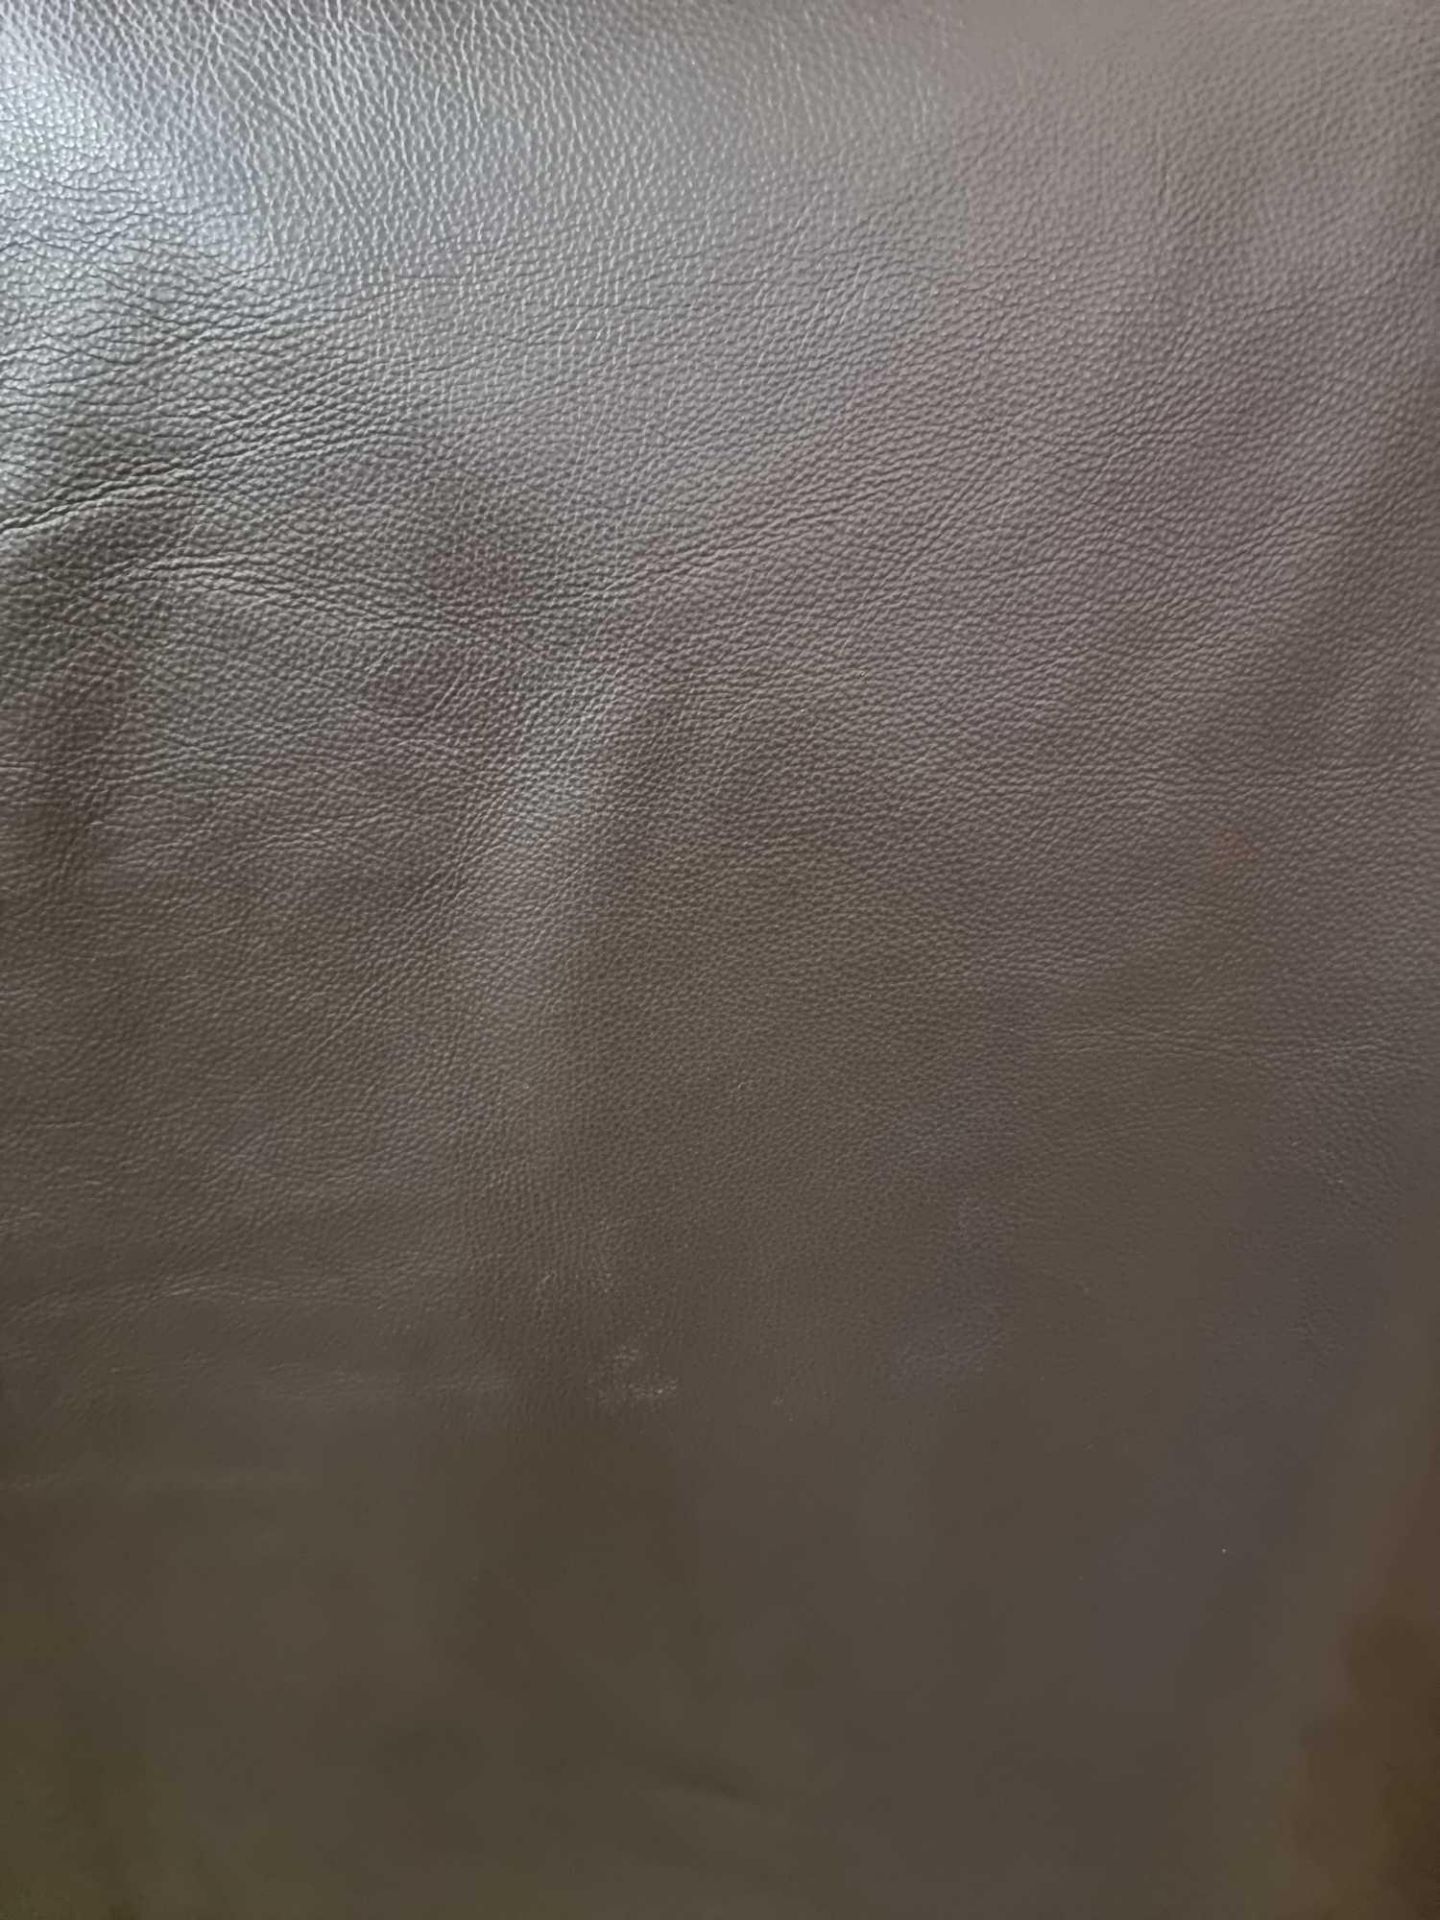 Yarwood Hammersmith Chocolate Leather Hide approximately 3 6M2 2 x 1 8cm ( Hide No,77) - Bild 2 aus 2